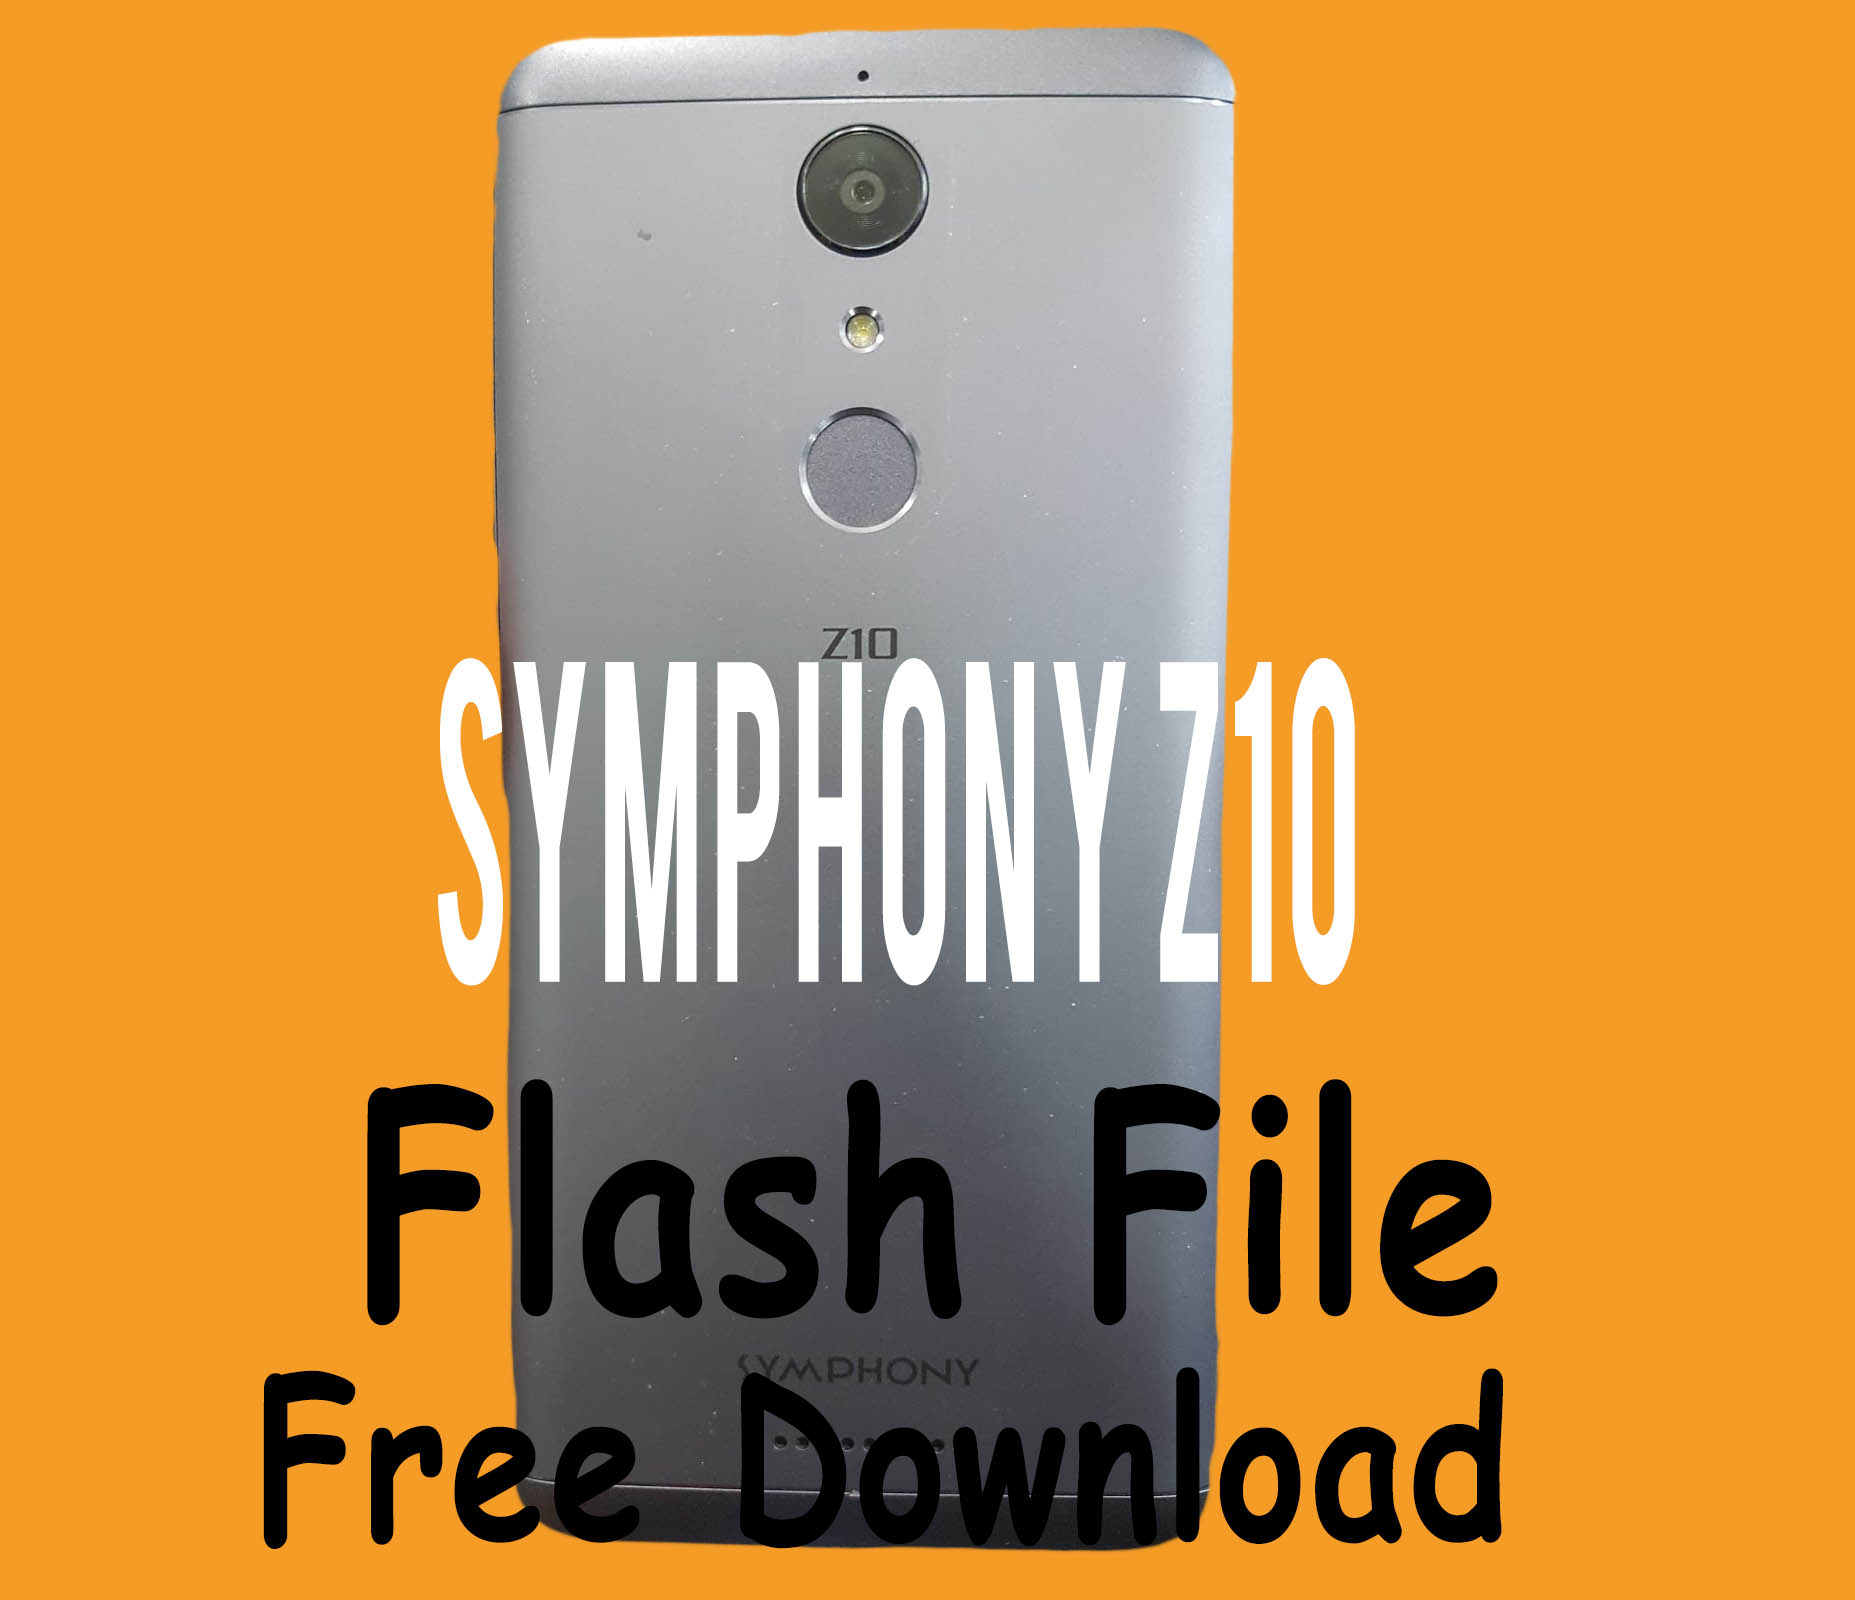 Symphony Z10 Flash File Without Password